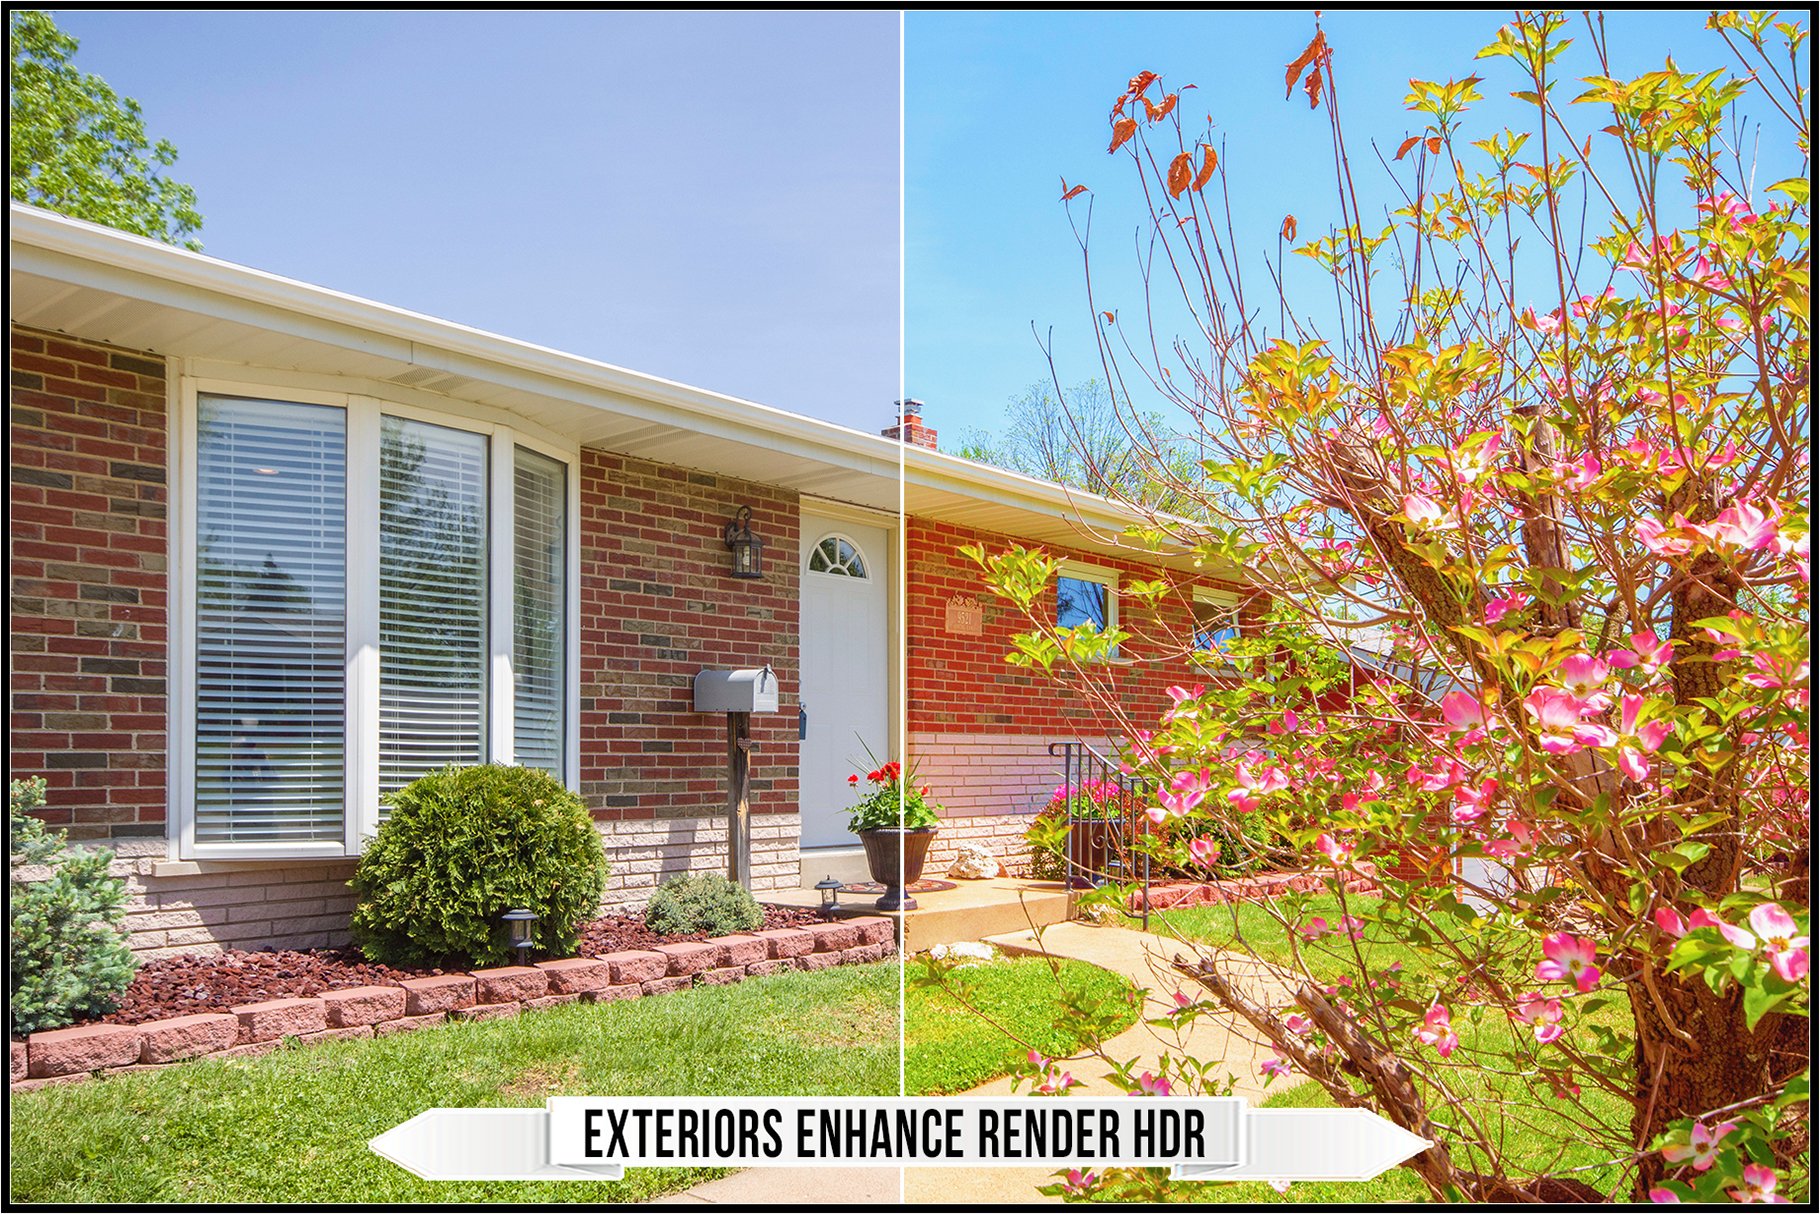 exteriors enhance render hdr 136